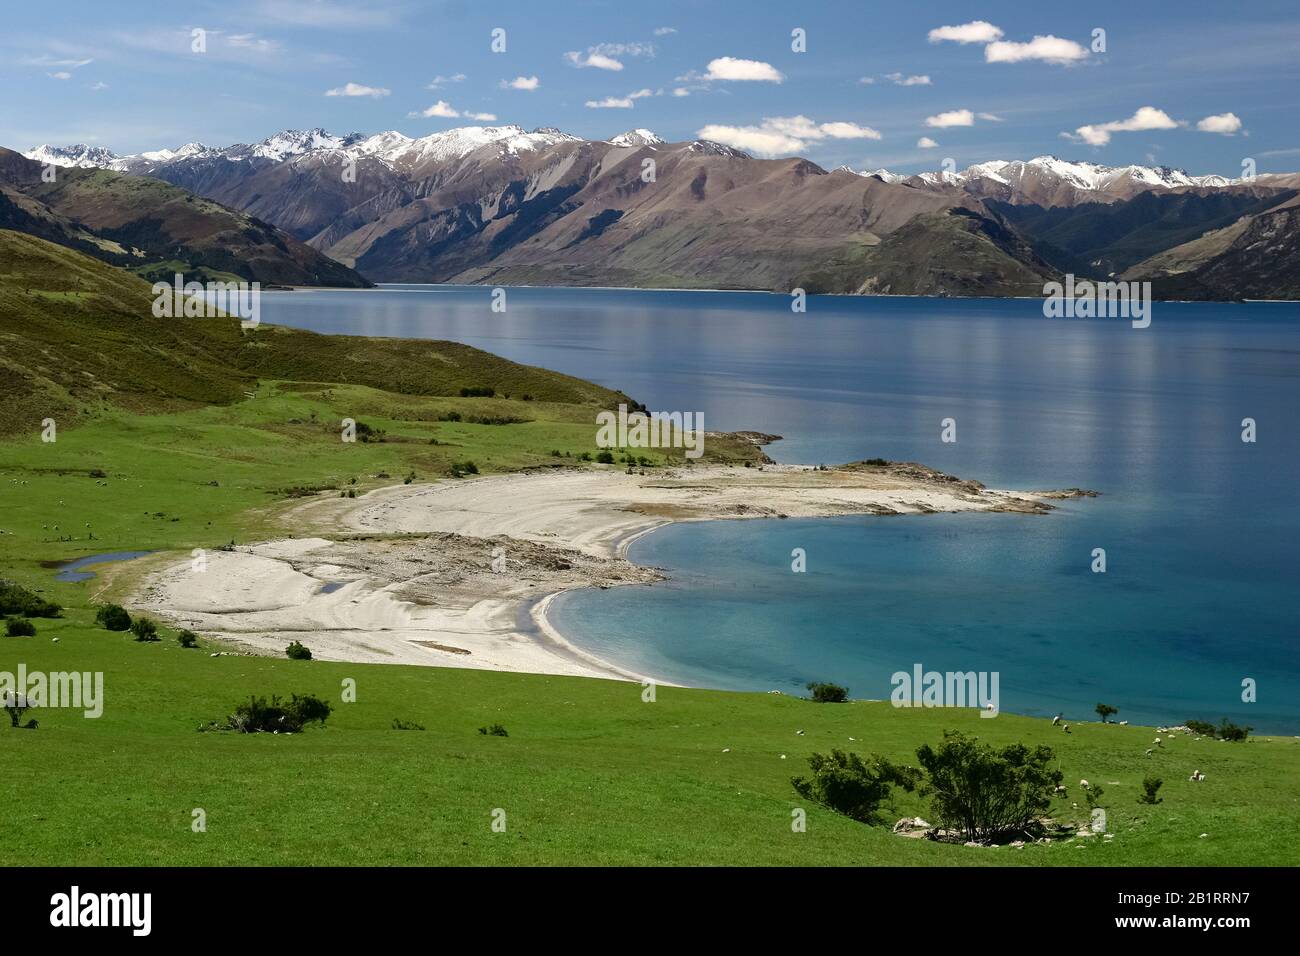 New Zealand Alps, South Island, New Zealand Stock Photo